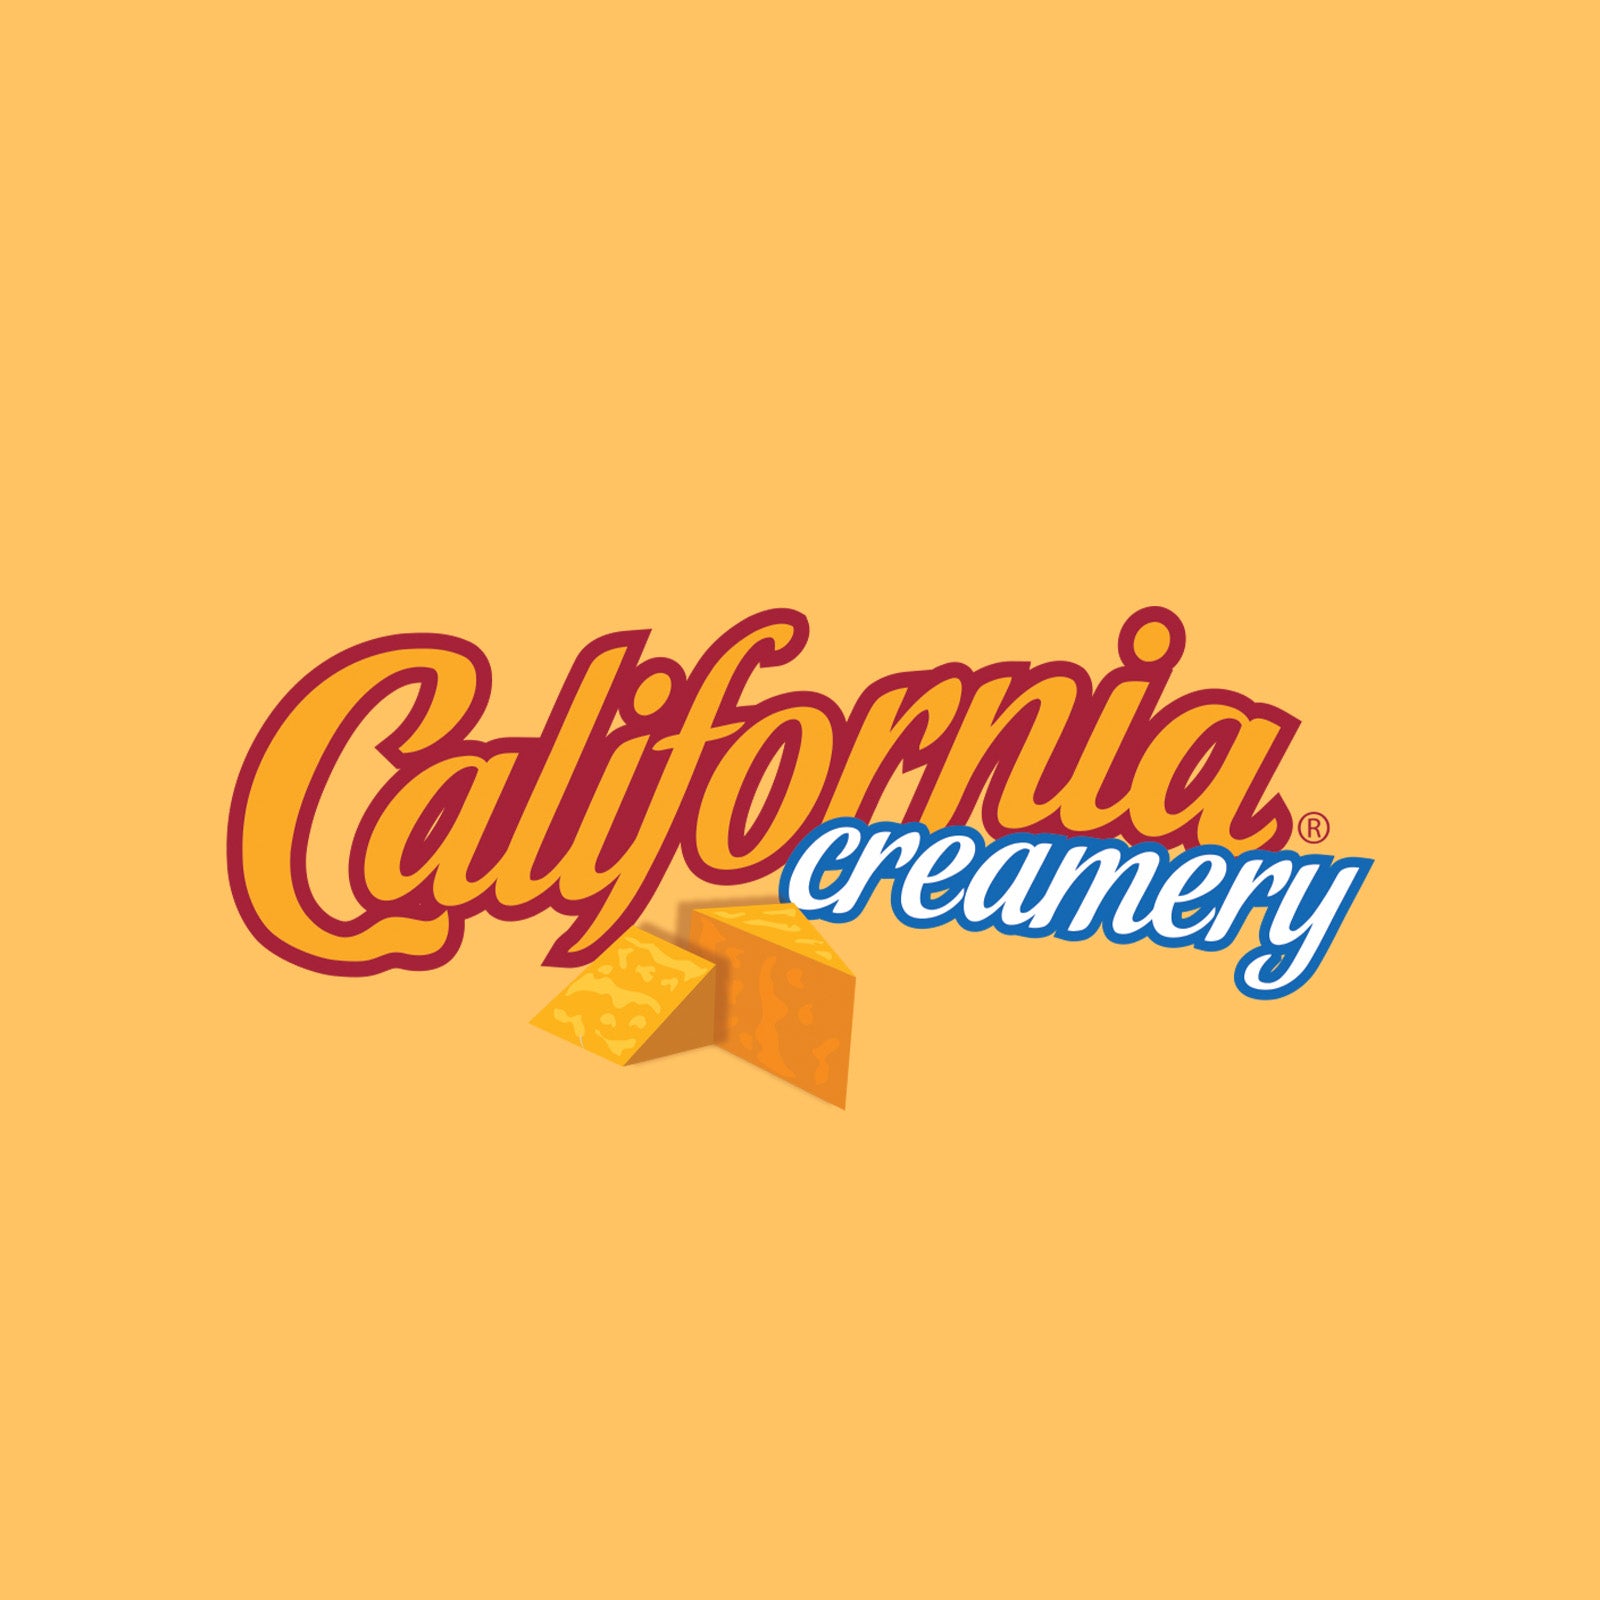 California Creamery